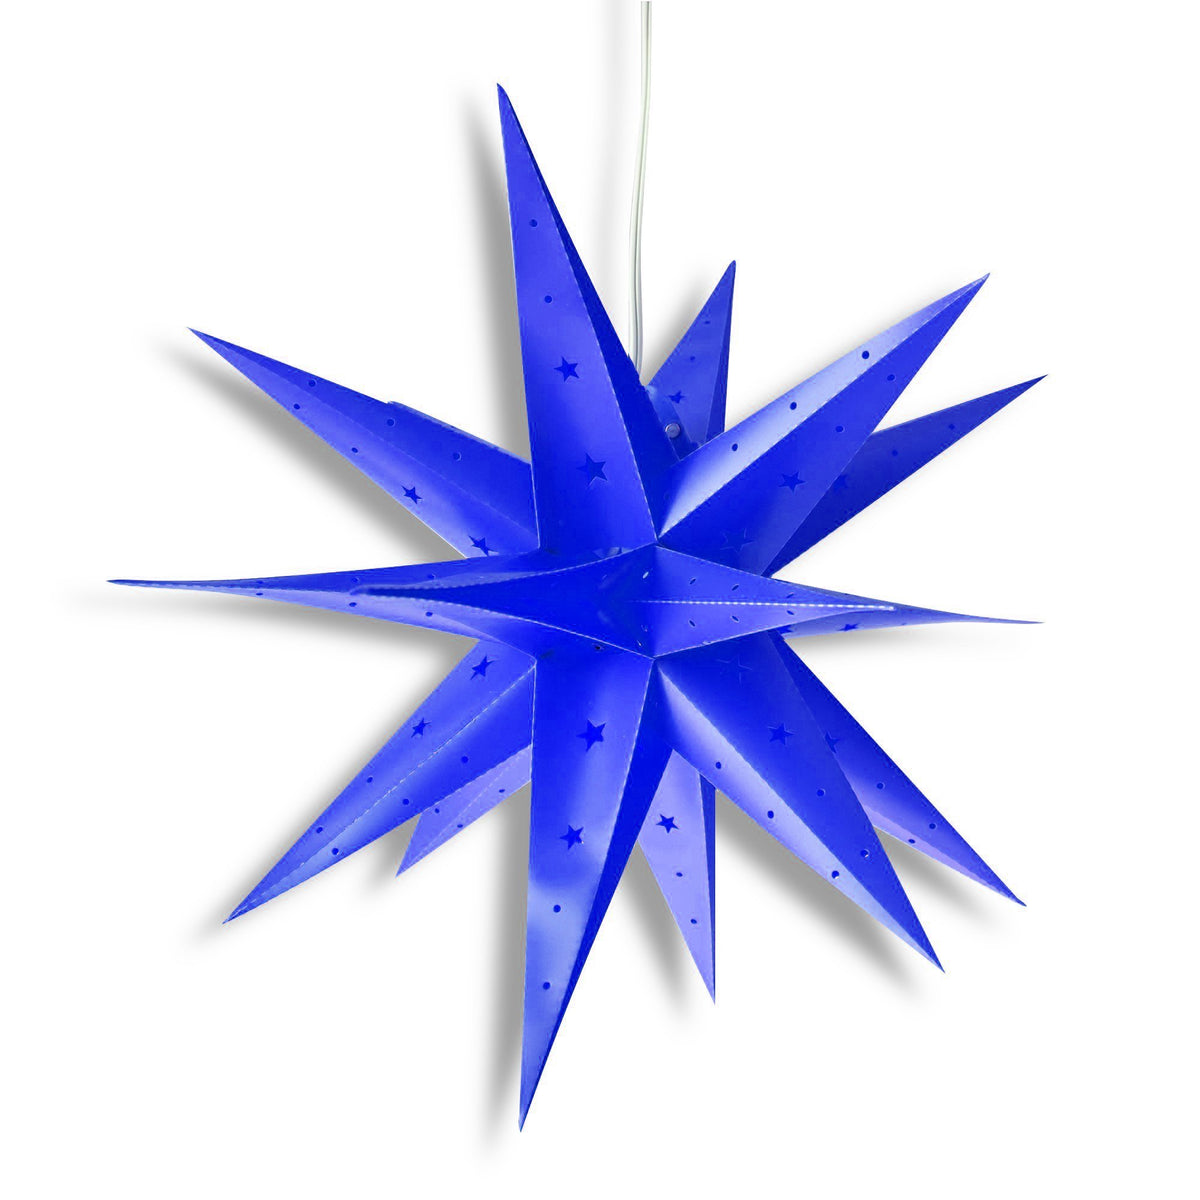 24&quot; Dark Blue Weatherproof Moravian Star Lantern Lamp, Hanging Decoration - PaperLanternStore.com - Paper Lanterns, Decor, Party Lights &amp; More